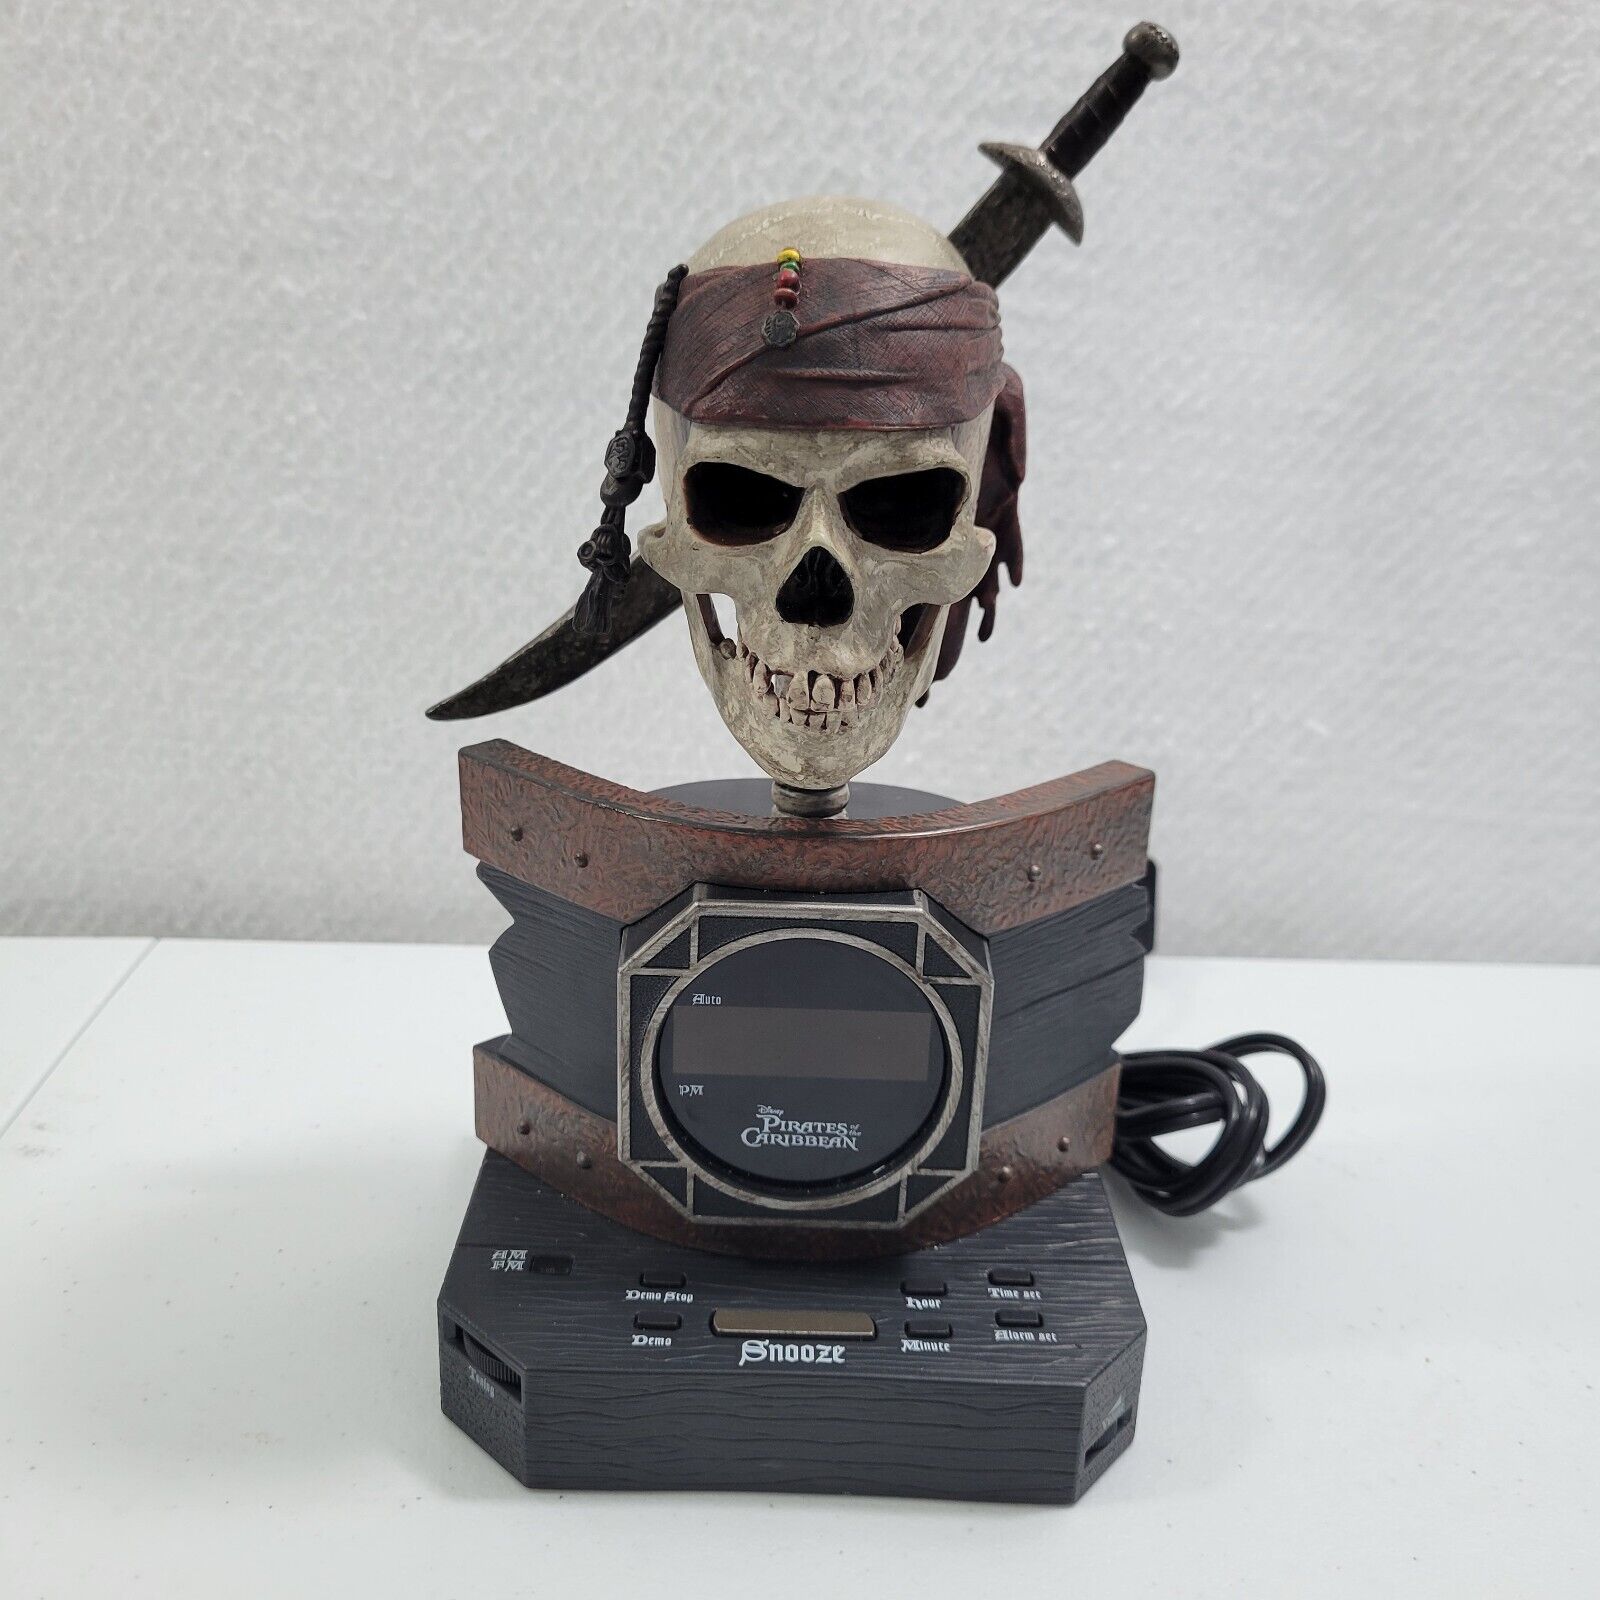 Disney The Pirates Of The Caribbean Talking Am/Fm Radio Alarm Clock 42624-2M8